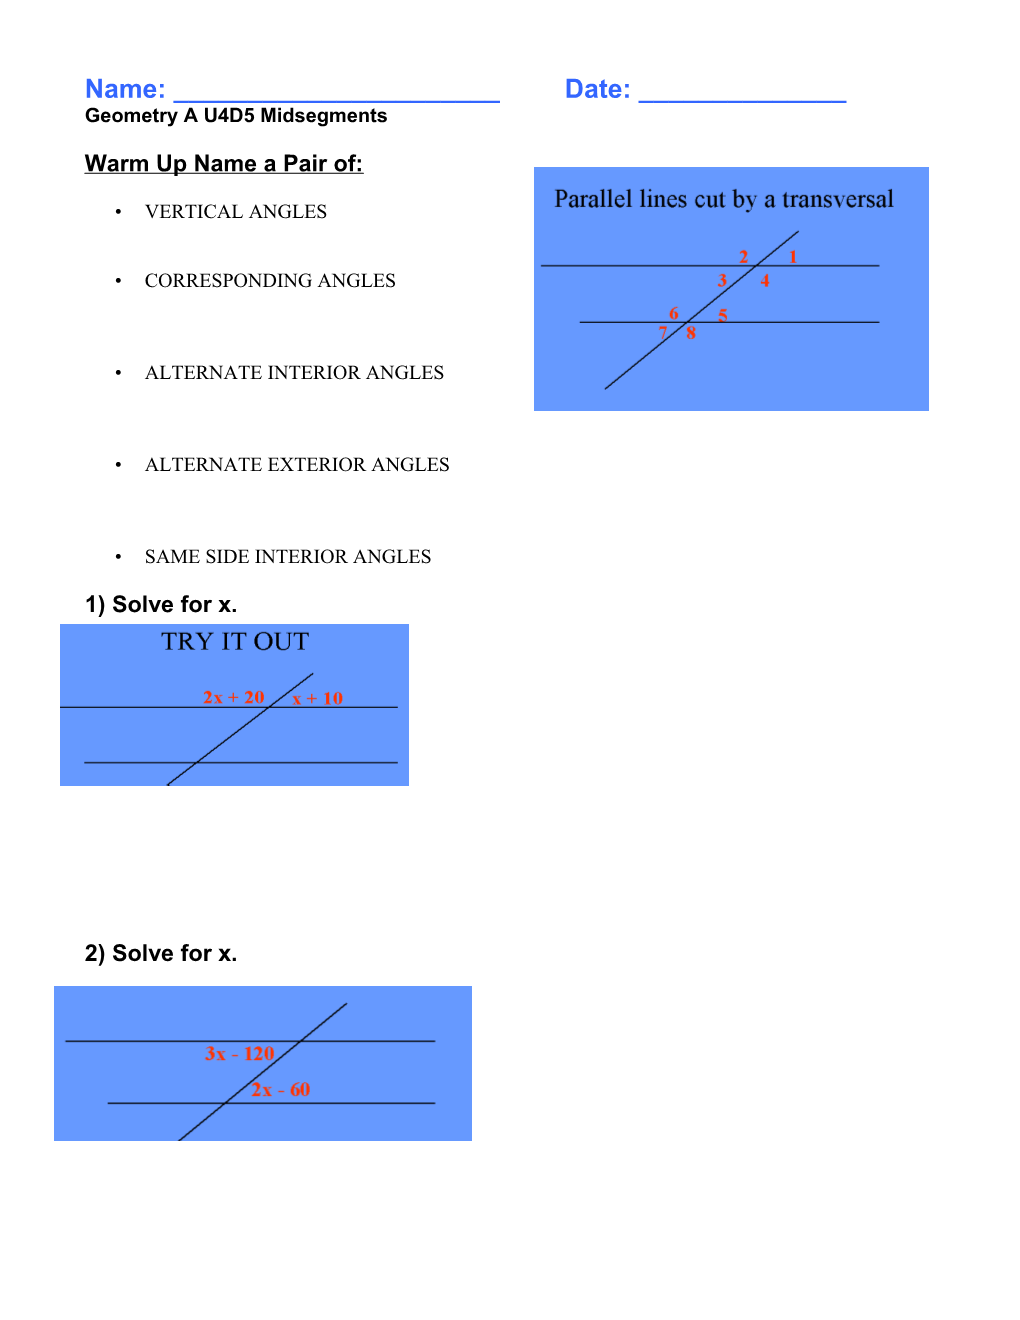 Geometry a U4D5 Midsegments